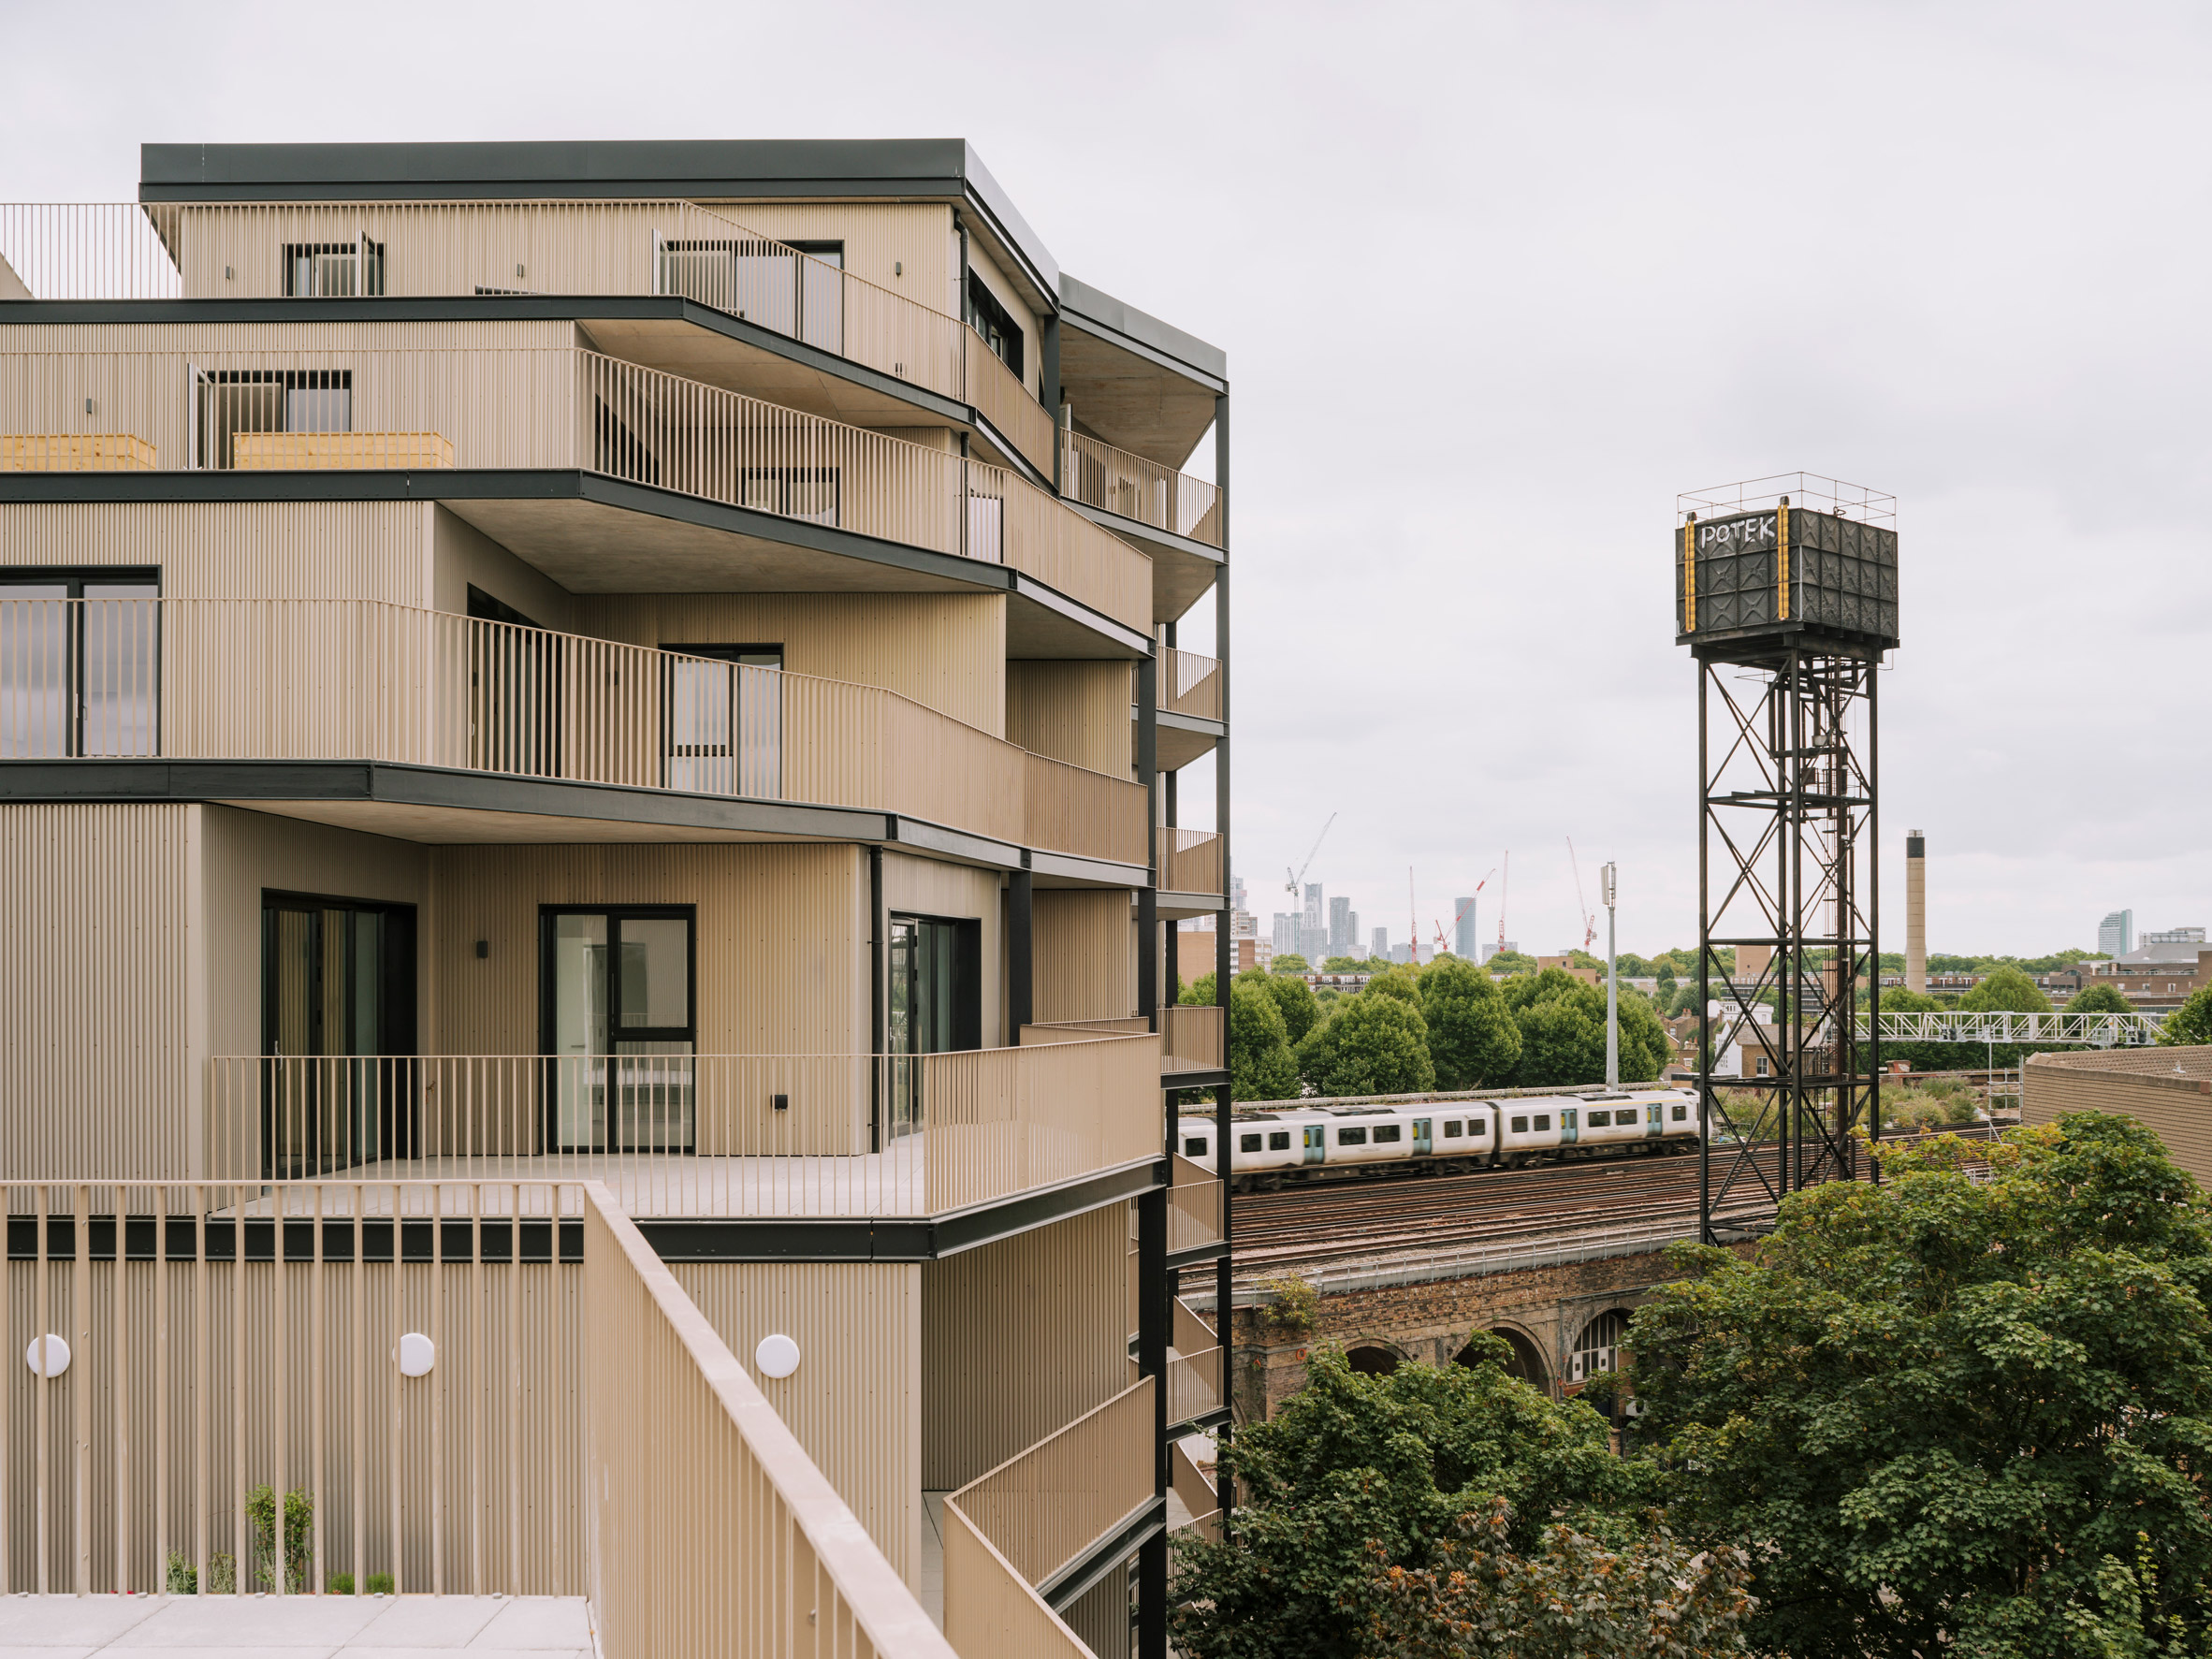 Apartments and balconies overlooking London railway line